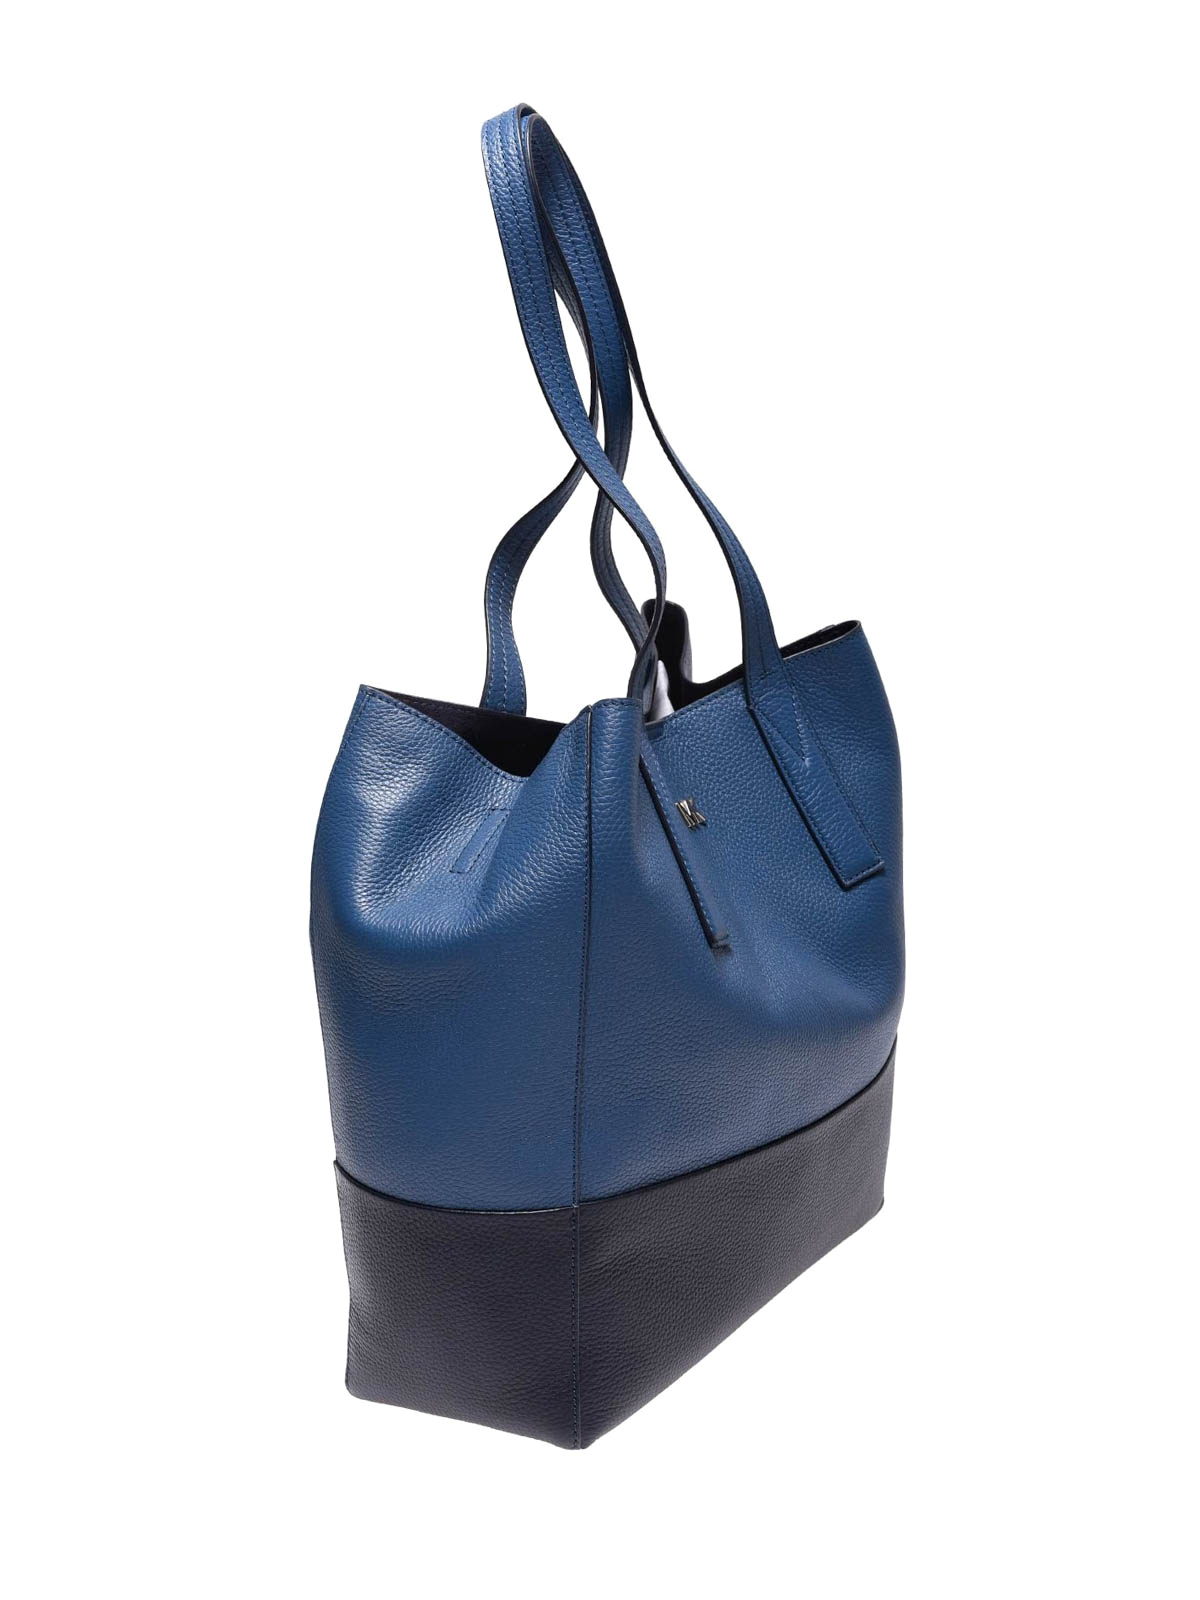 michael kors blue leather bag